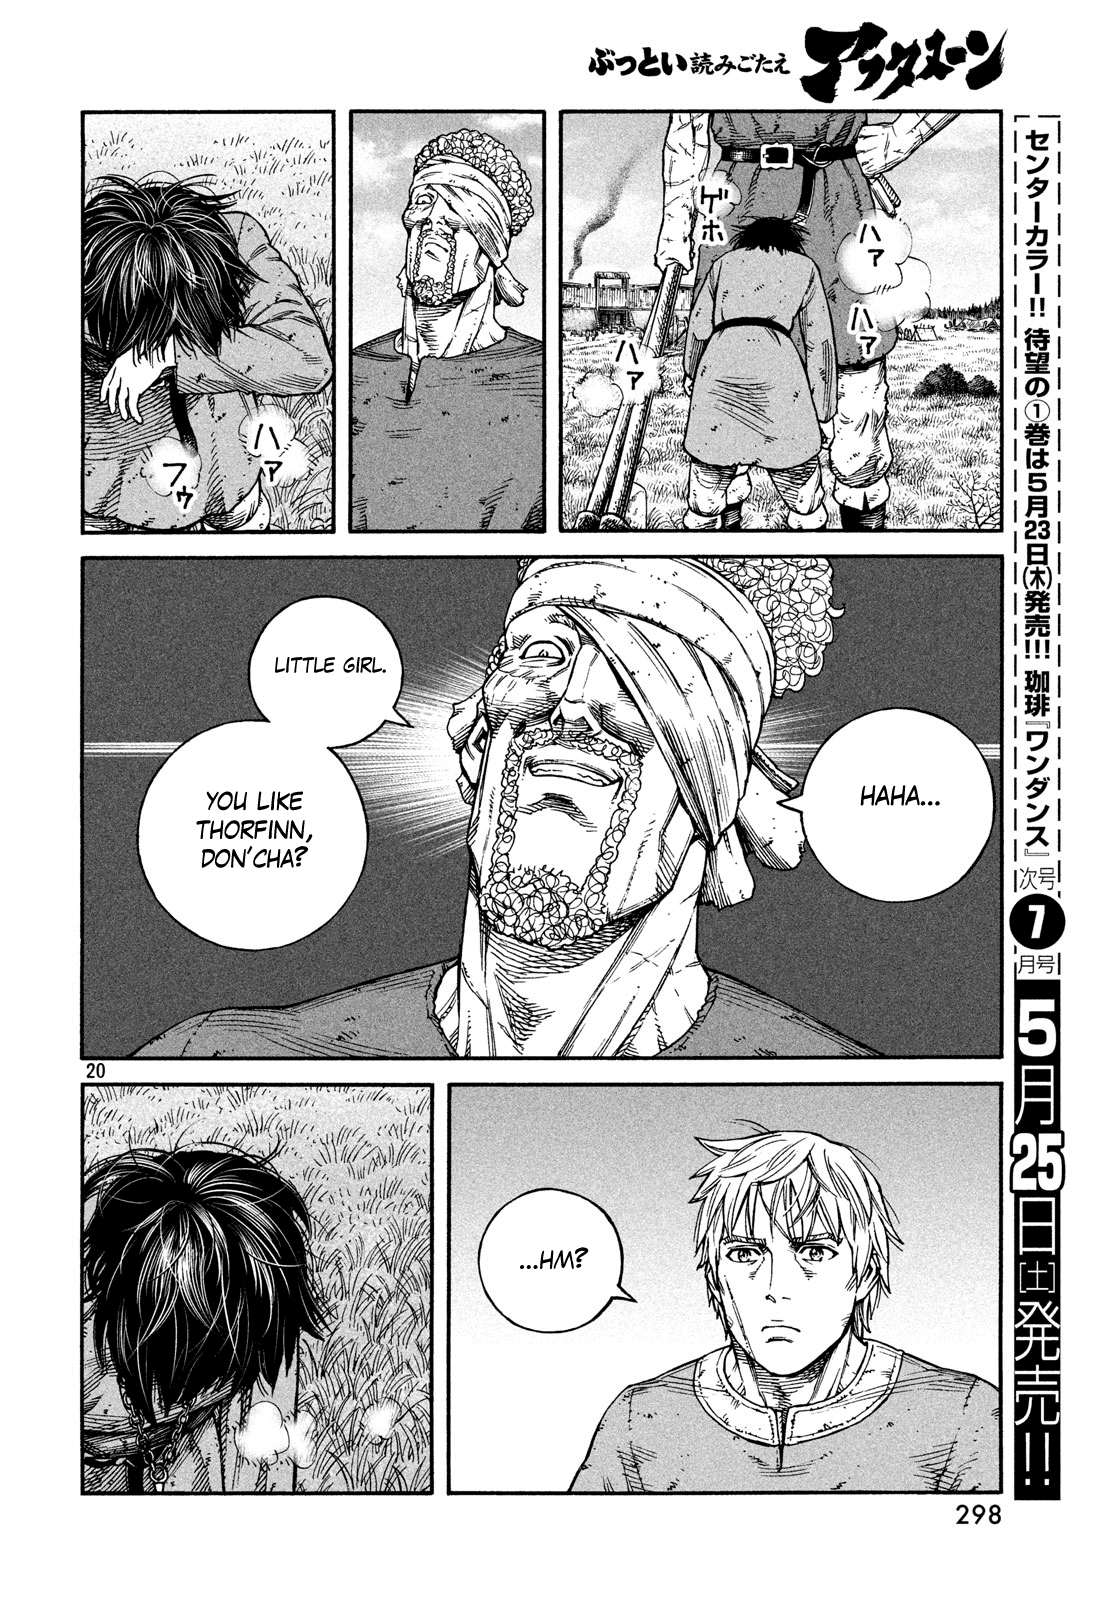 Vinland Saga Manga Manga Chapter - 160 - image 19